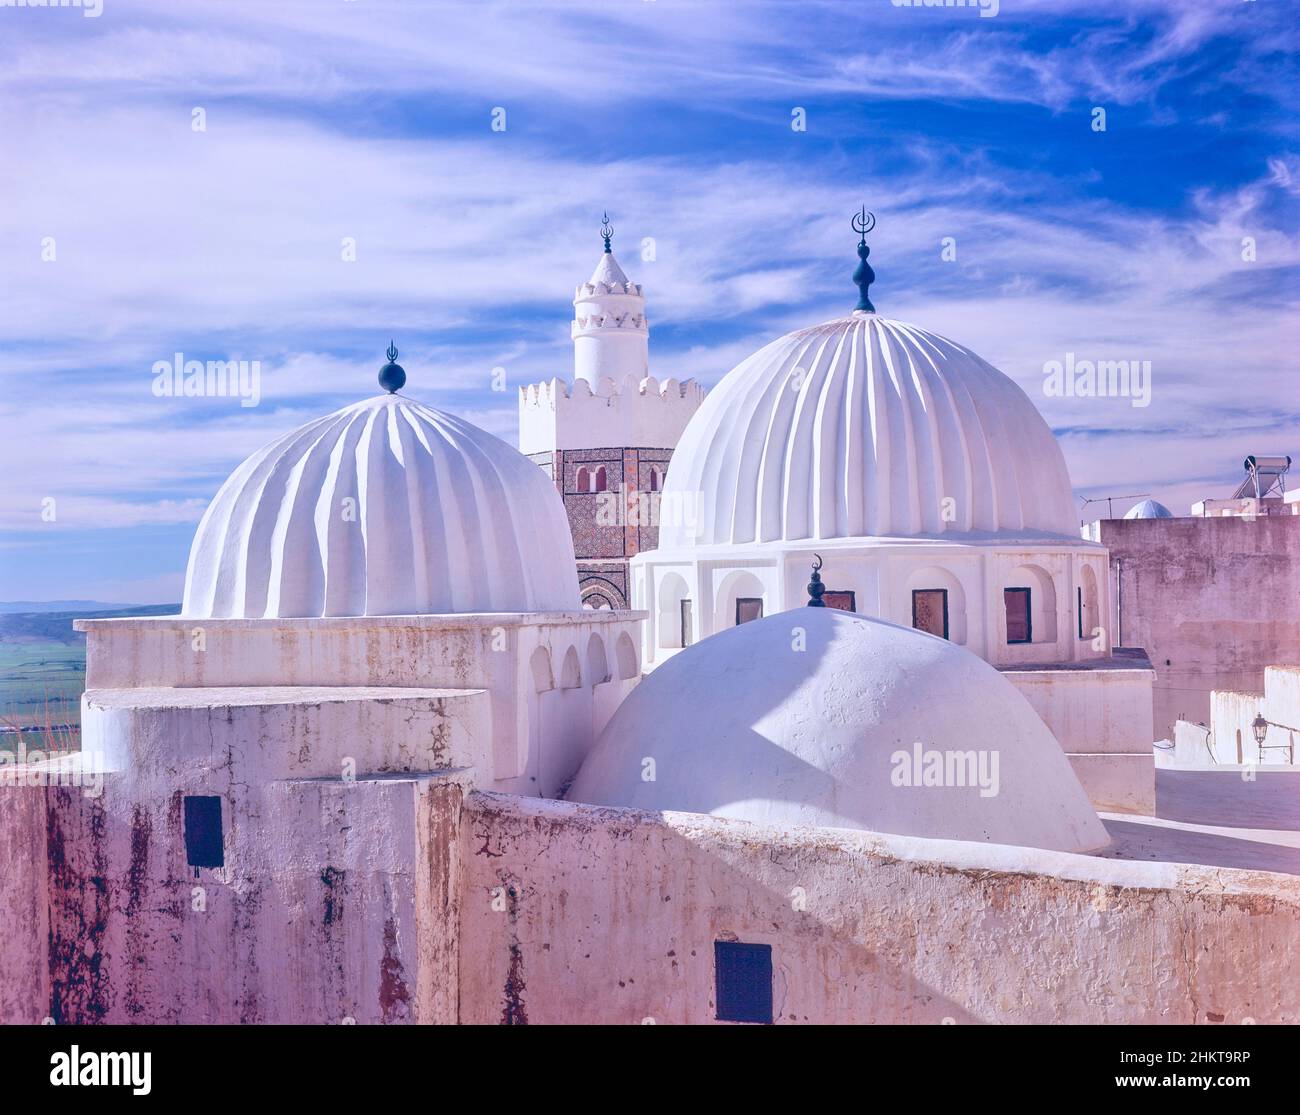 Intimate travel image of Tunisia Stock Photo